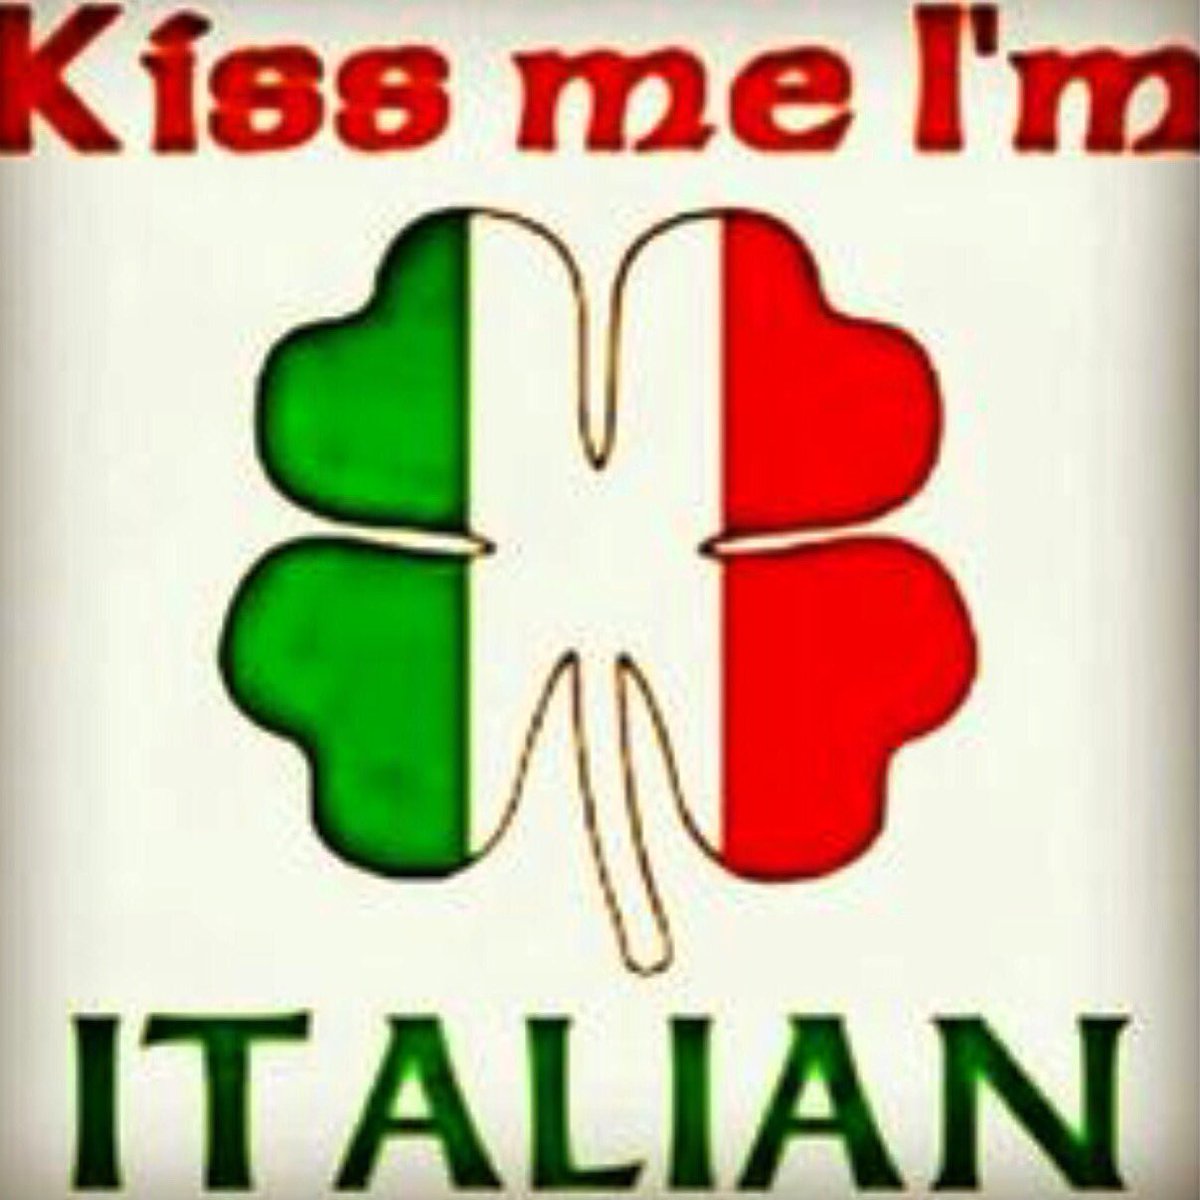 Did you know that St. Patrick was #Italian? #Detroit #kissmeimitalian